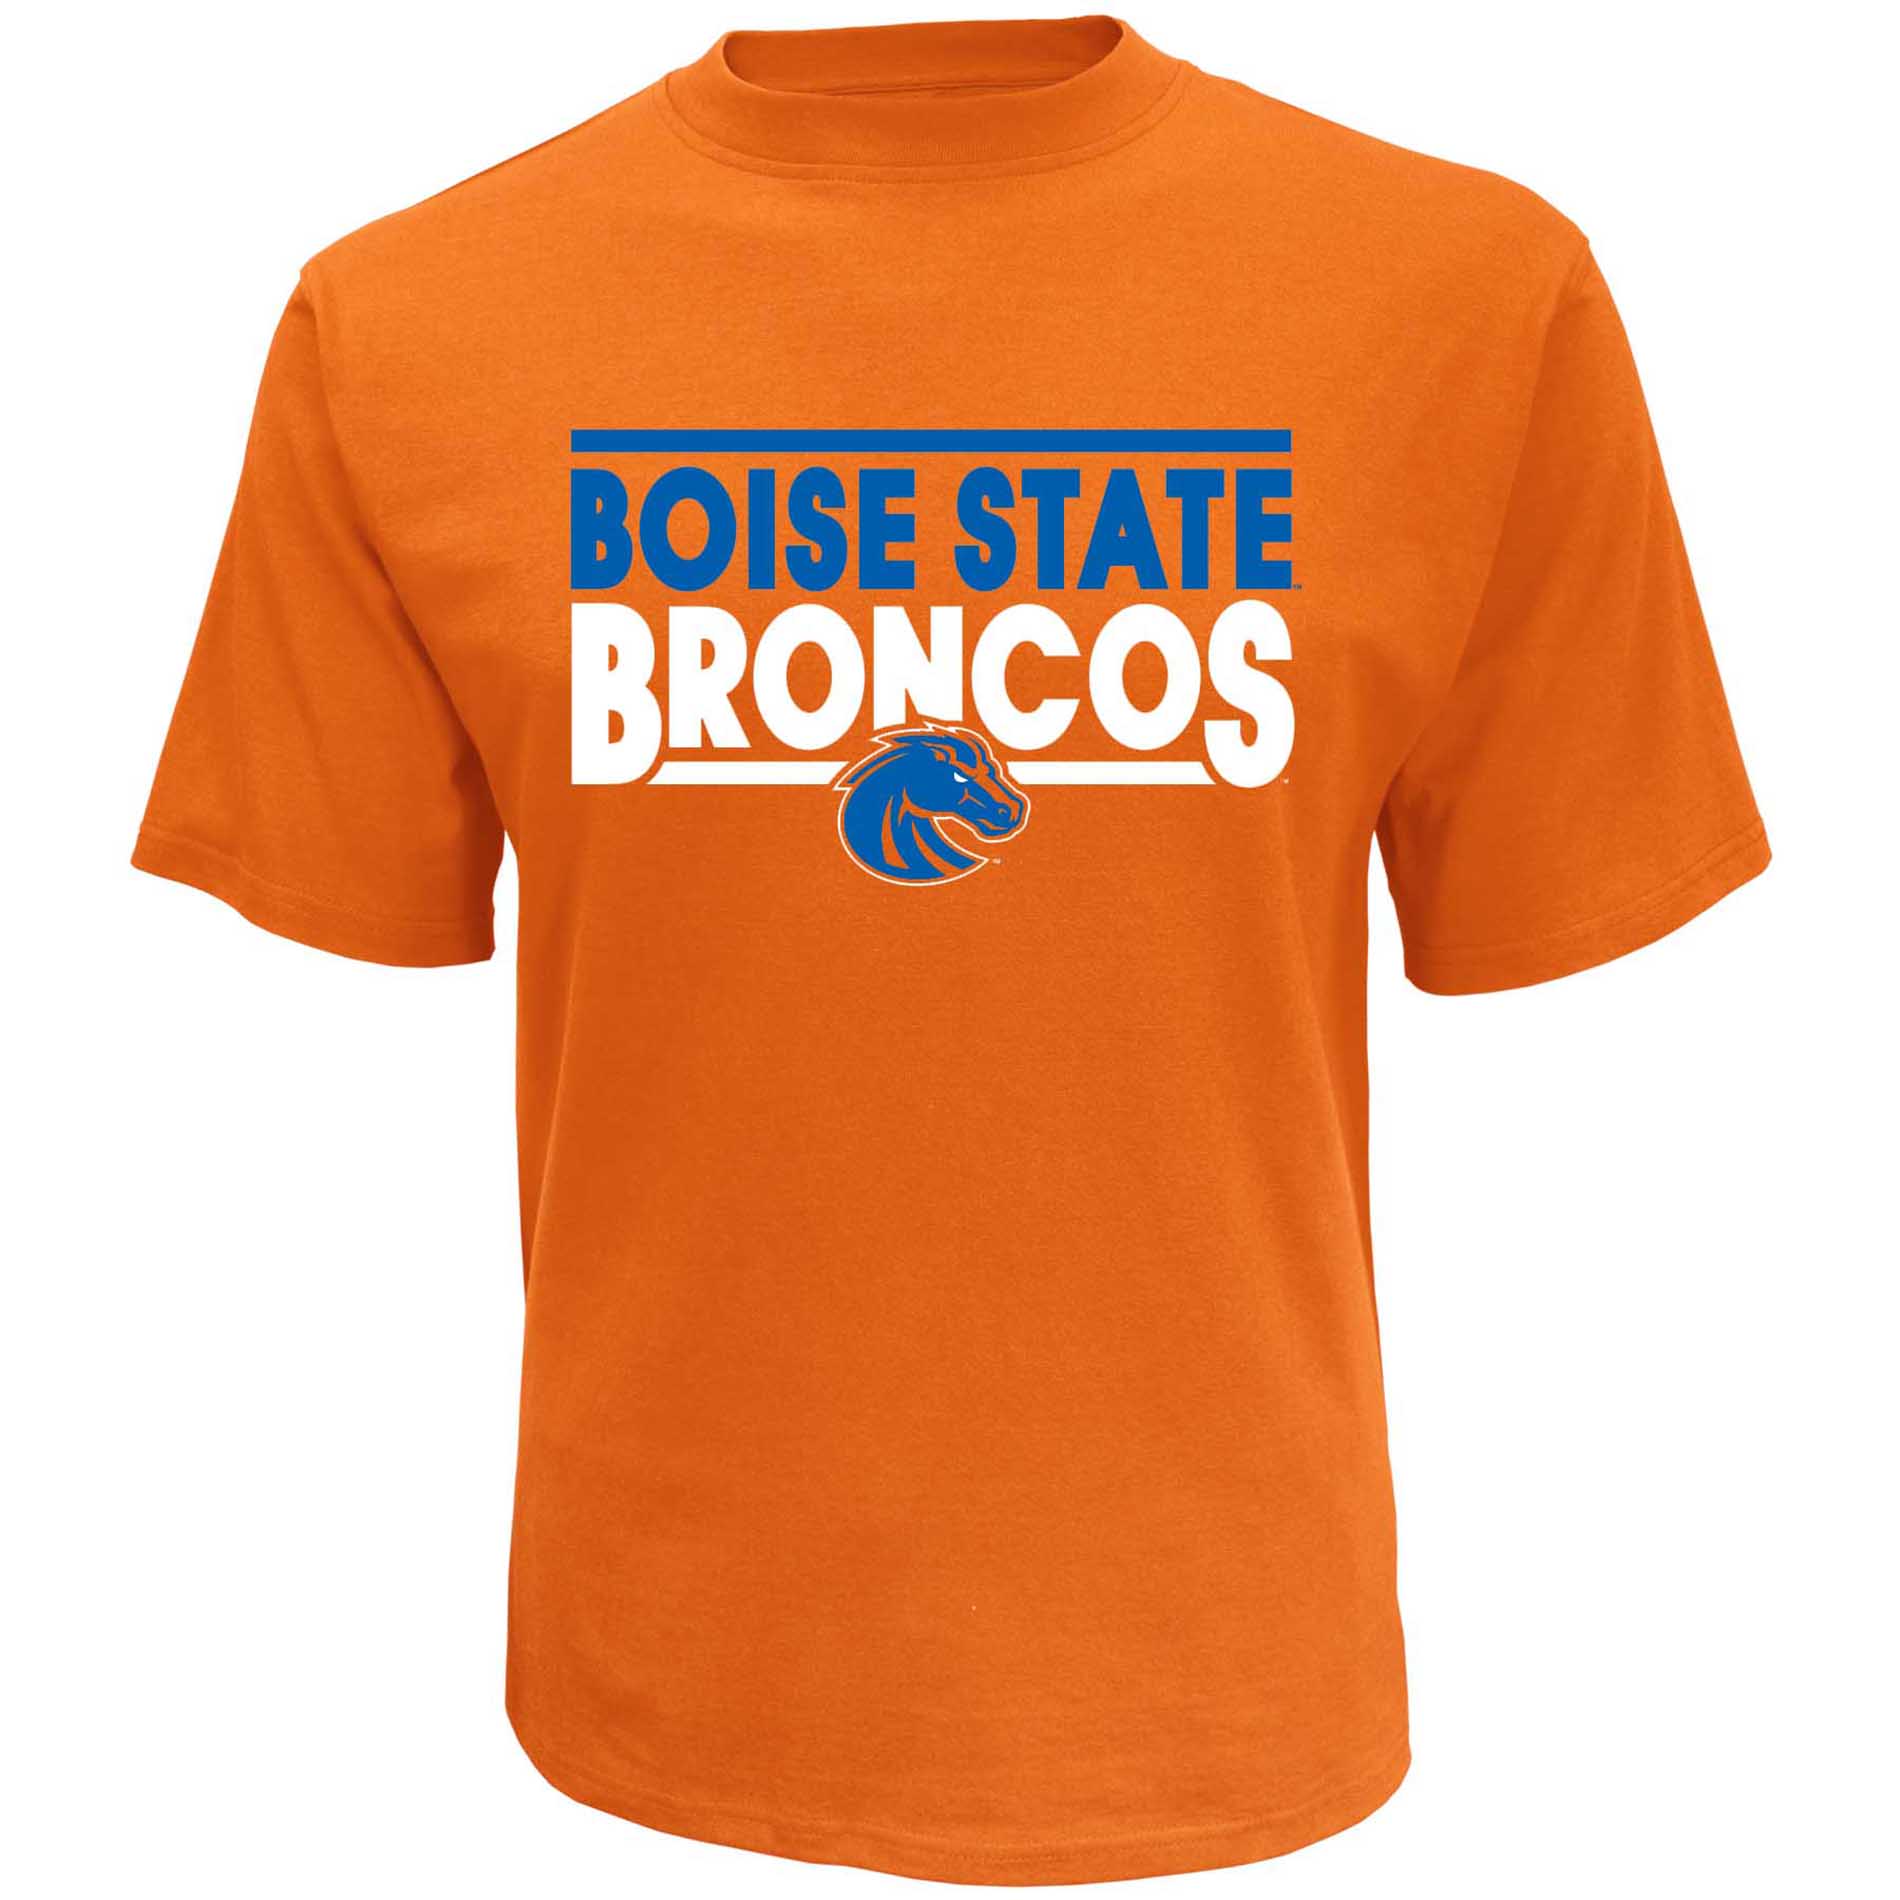 NCAA Mens' Boise State Broncos Short Sleeve Print Tee